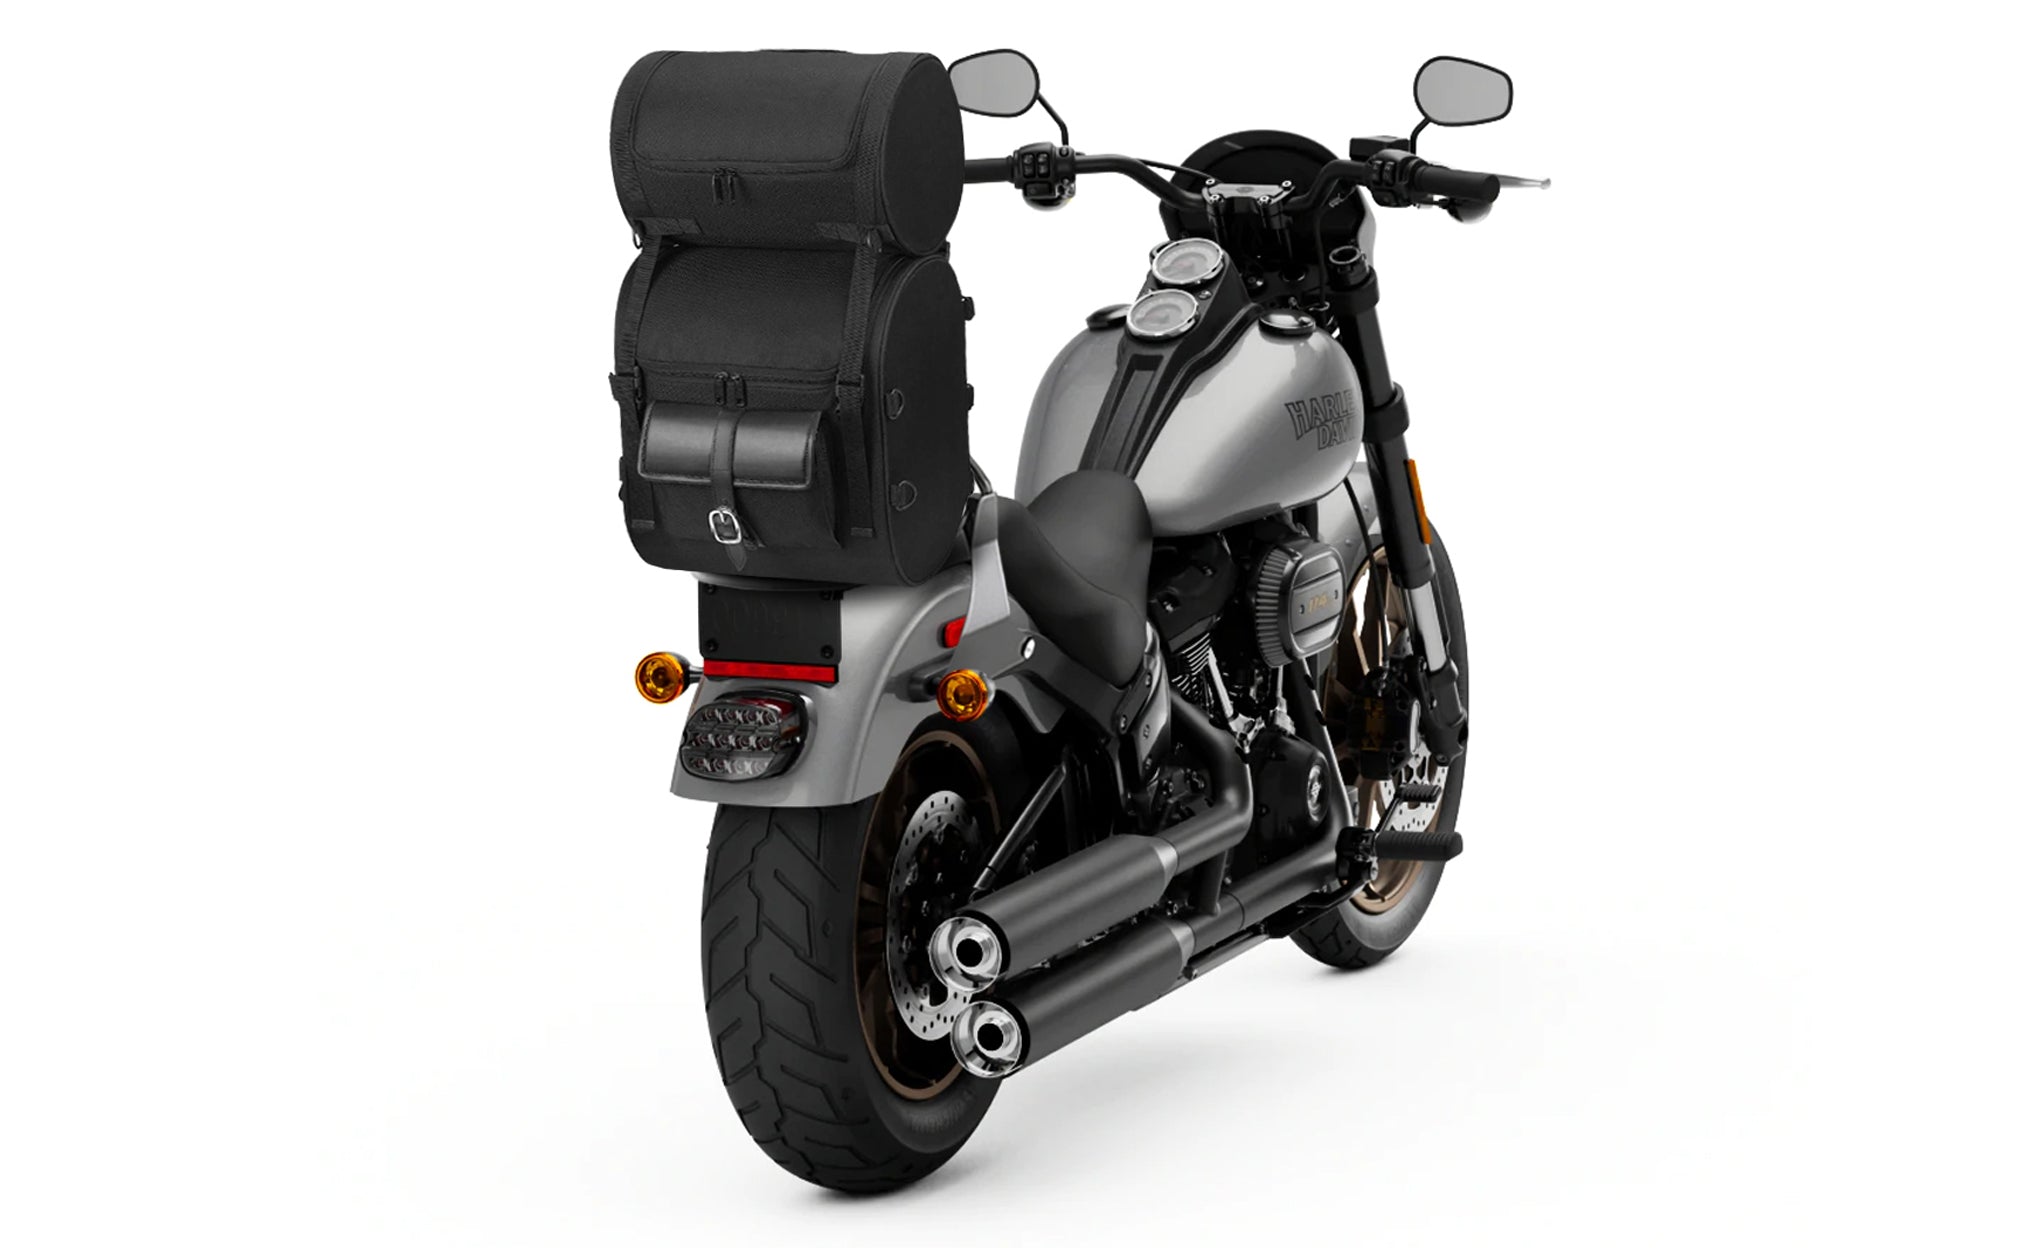 Viking Economy Line Medium Suzuki Motorcycle Sissy Bar Bag Bag on Bike View @expand